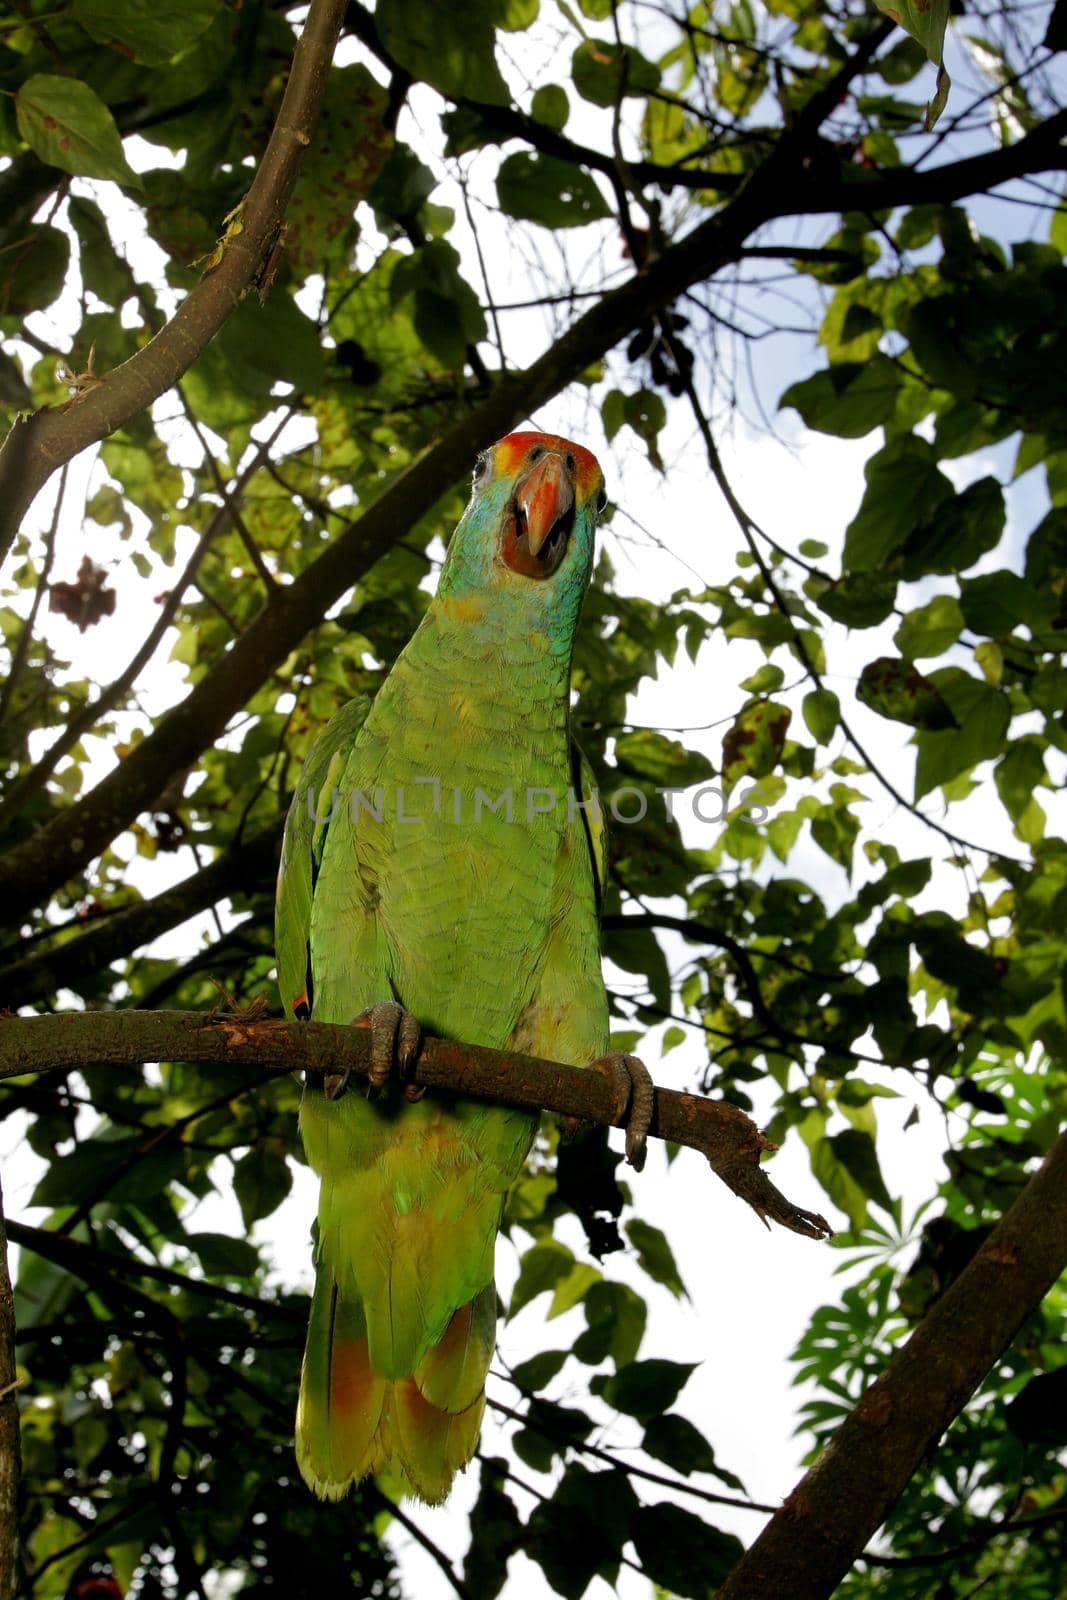 eunapolis, bahia / brazil - april 28, 2011: parrot is seen in a garden tree in the city of Eunapolis, in southern Bahia.